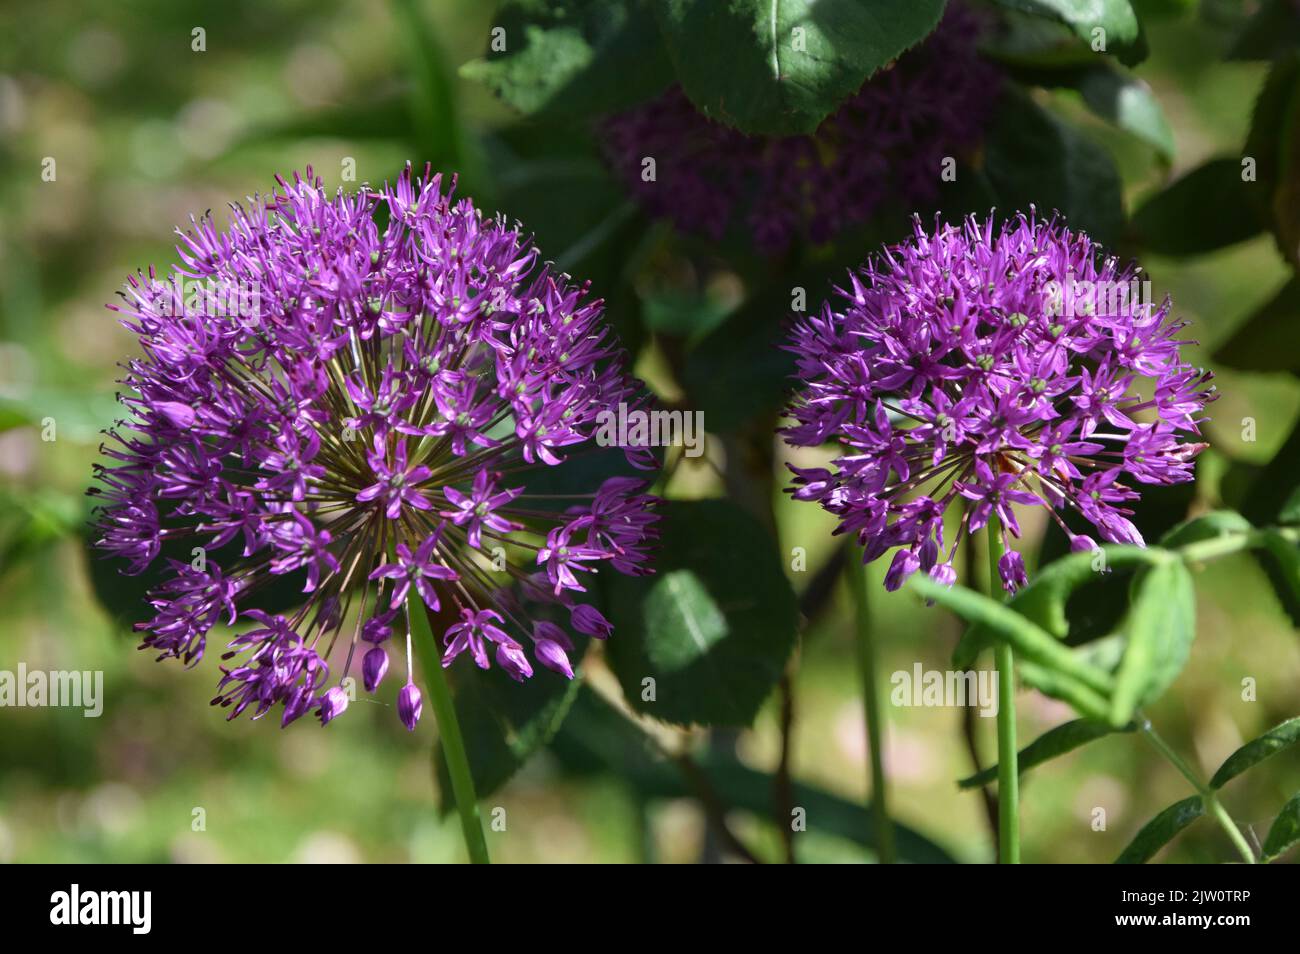 two purple alllium flower heads Stock Photo